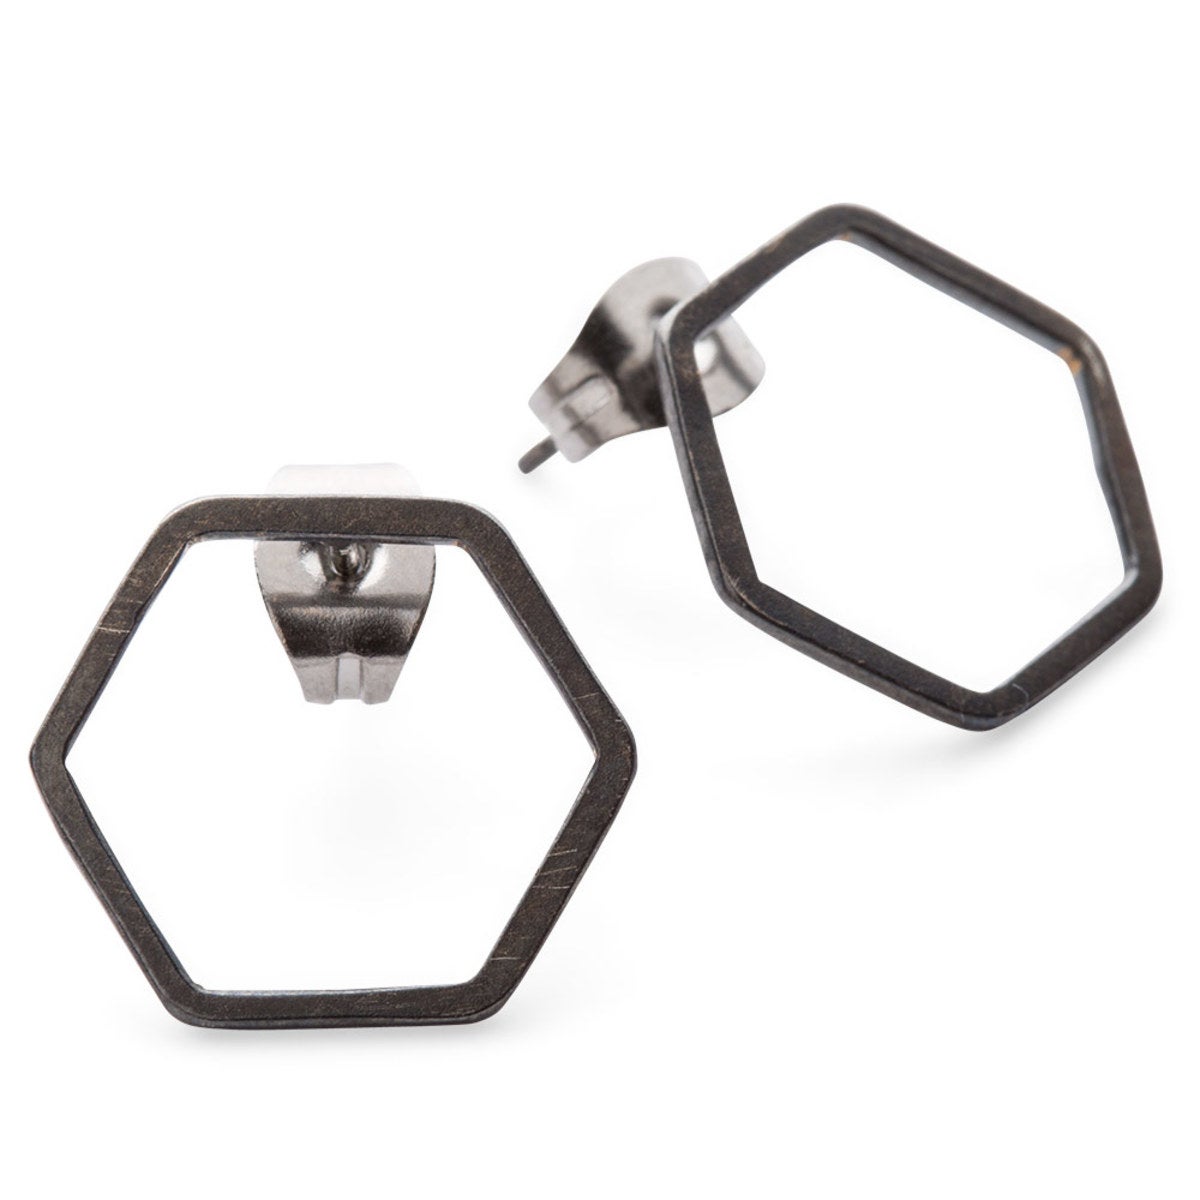 Artisan-Made Single Hexagon Stud Earrings in Oxidized Silver by Elaine B